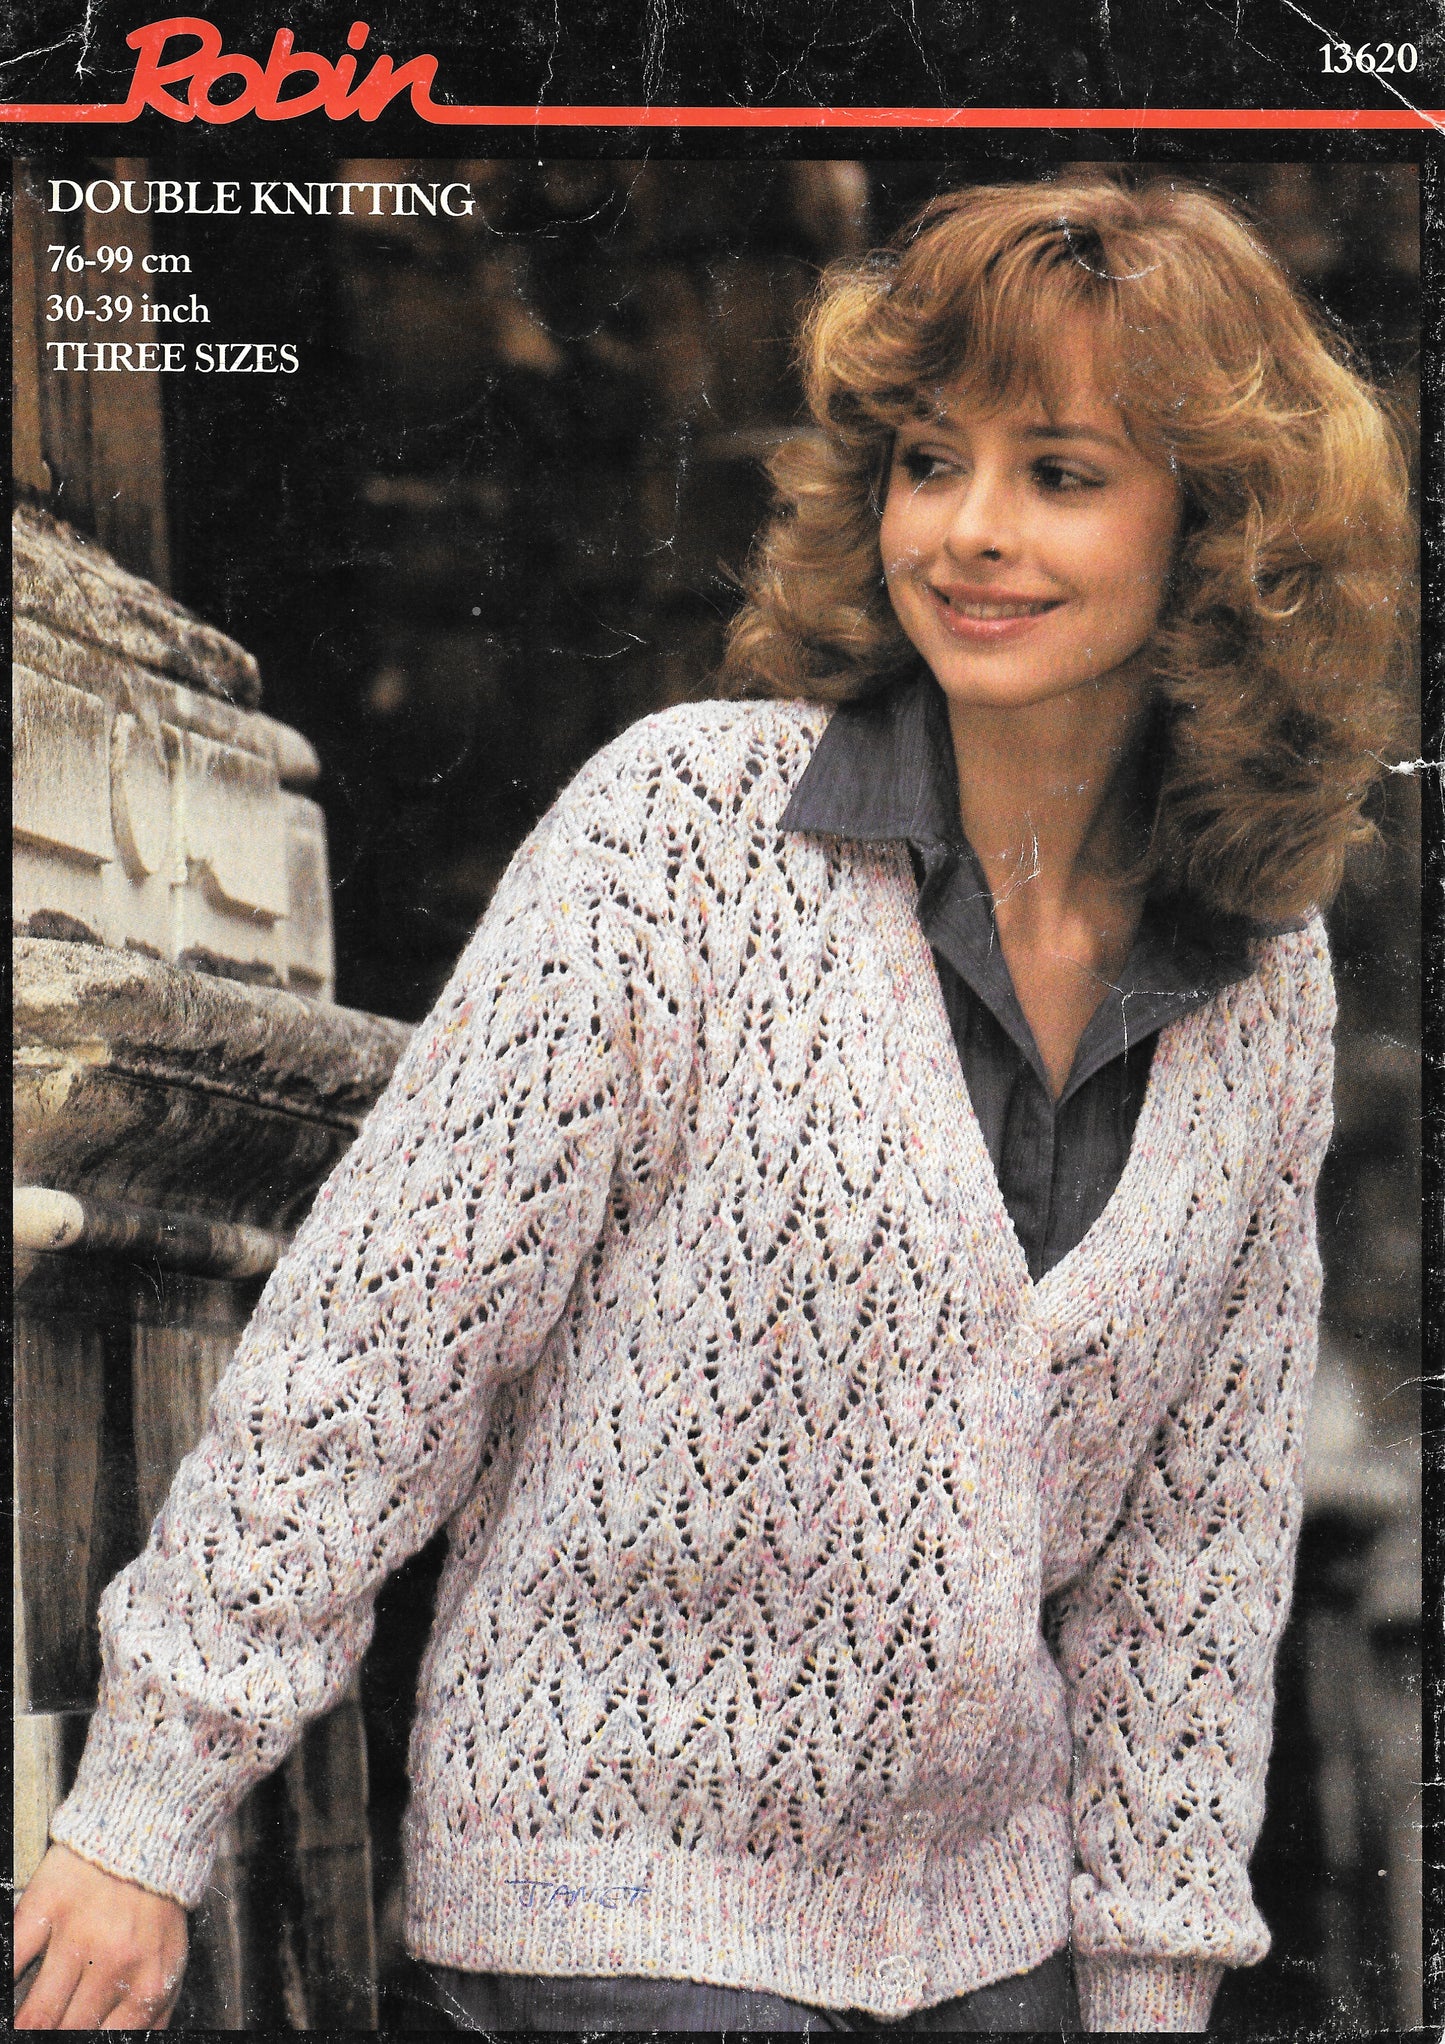 13620 PRELOVED Robin Knitting Pattern. Lady's Lacy Cardigan. DK